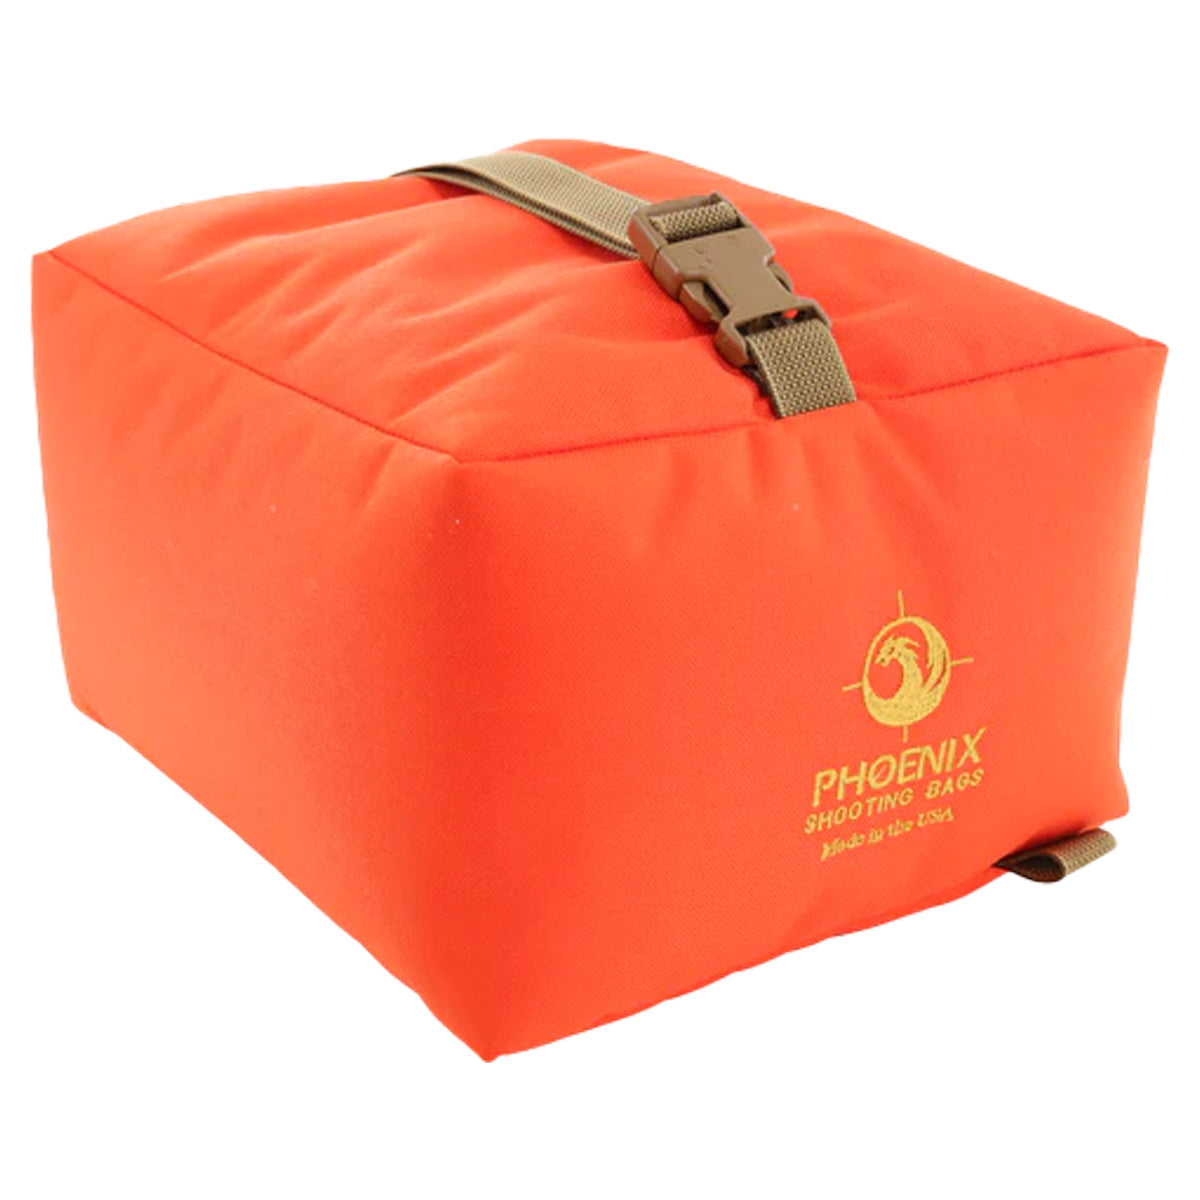 Phoenix Shooting Bags Large Bag (The Ultimate Rest) in Hunter Orange by GOHUNT | Phoenix Shooting Bags - GOHUNT Shop